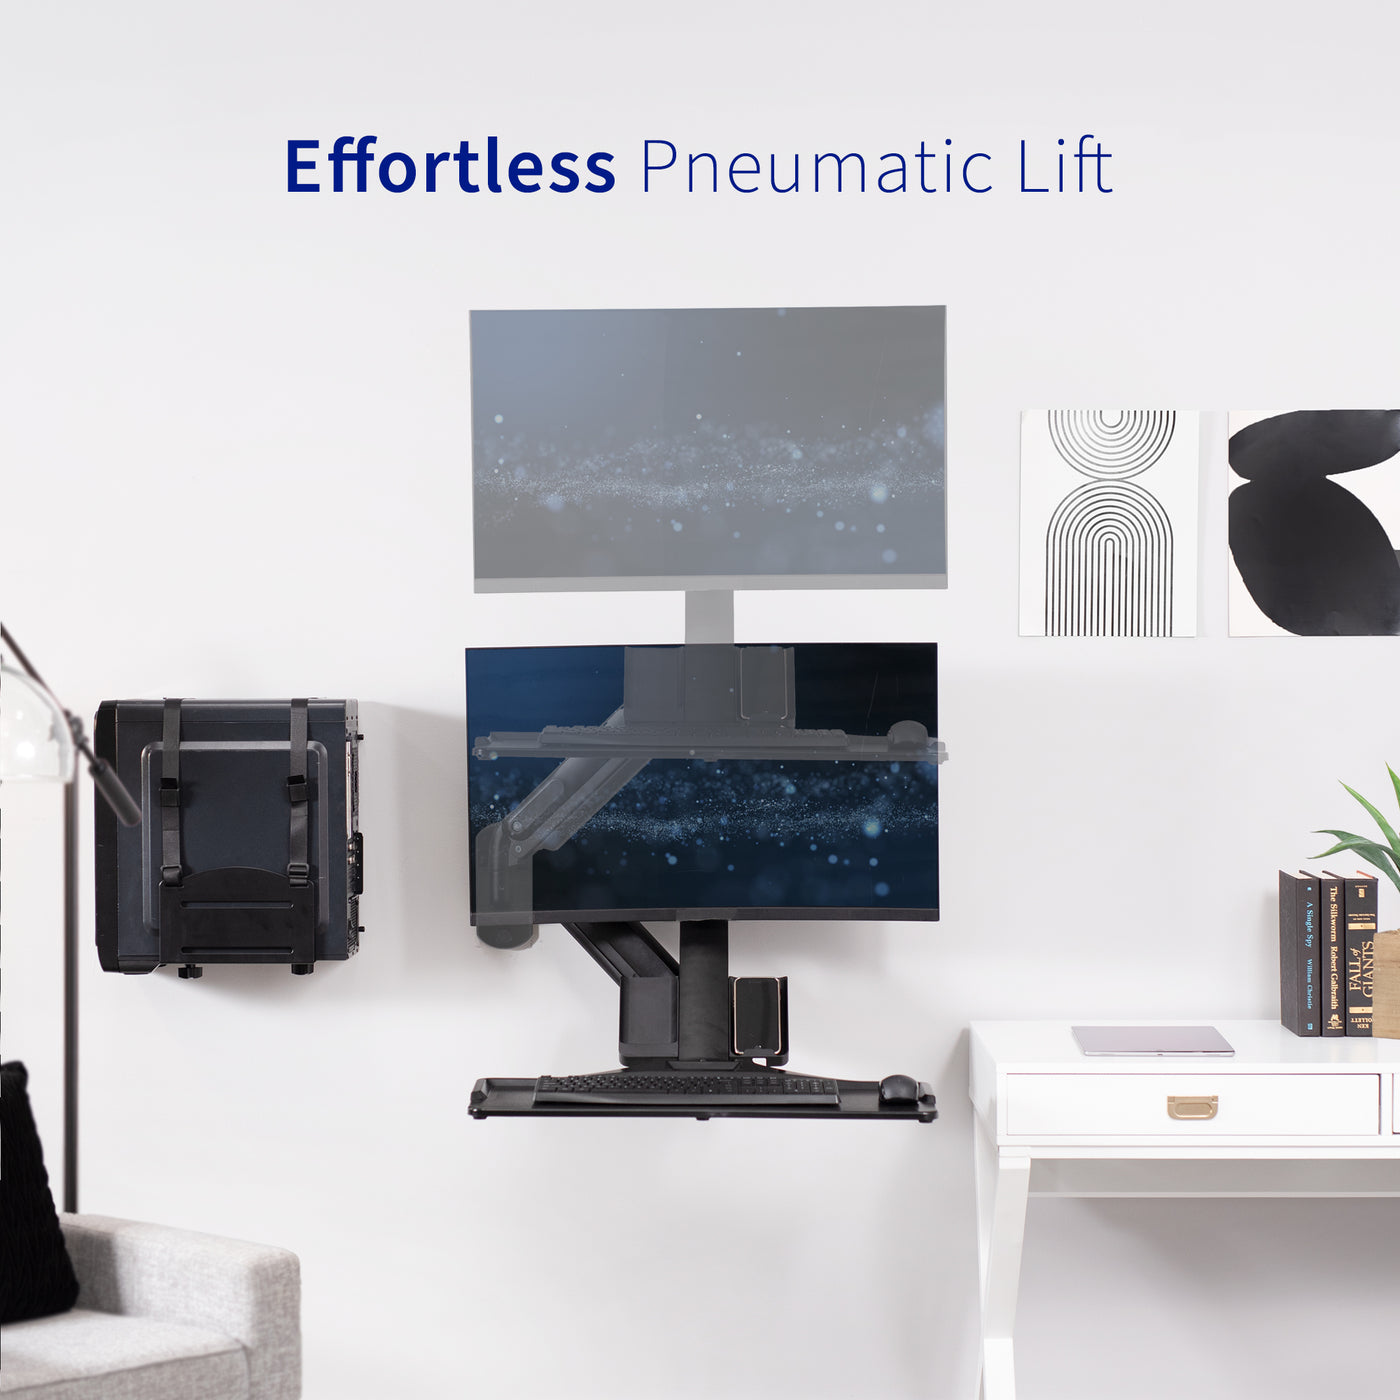 Sturdy ergonomic single monitor sit to stand wall mount workstation with pneumatic lift adjustment.